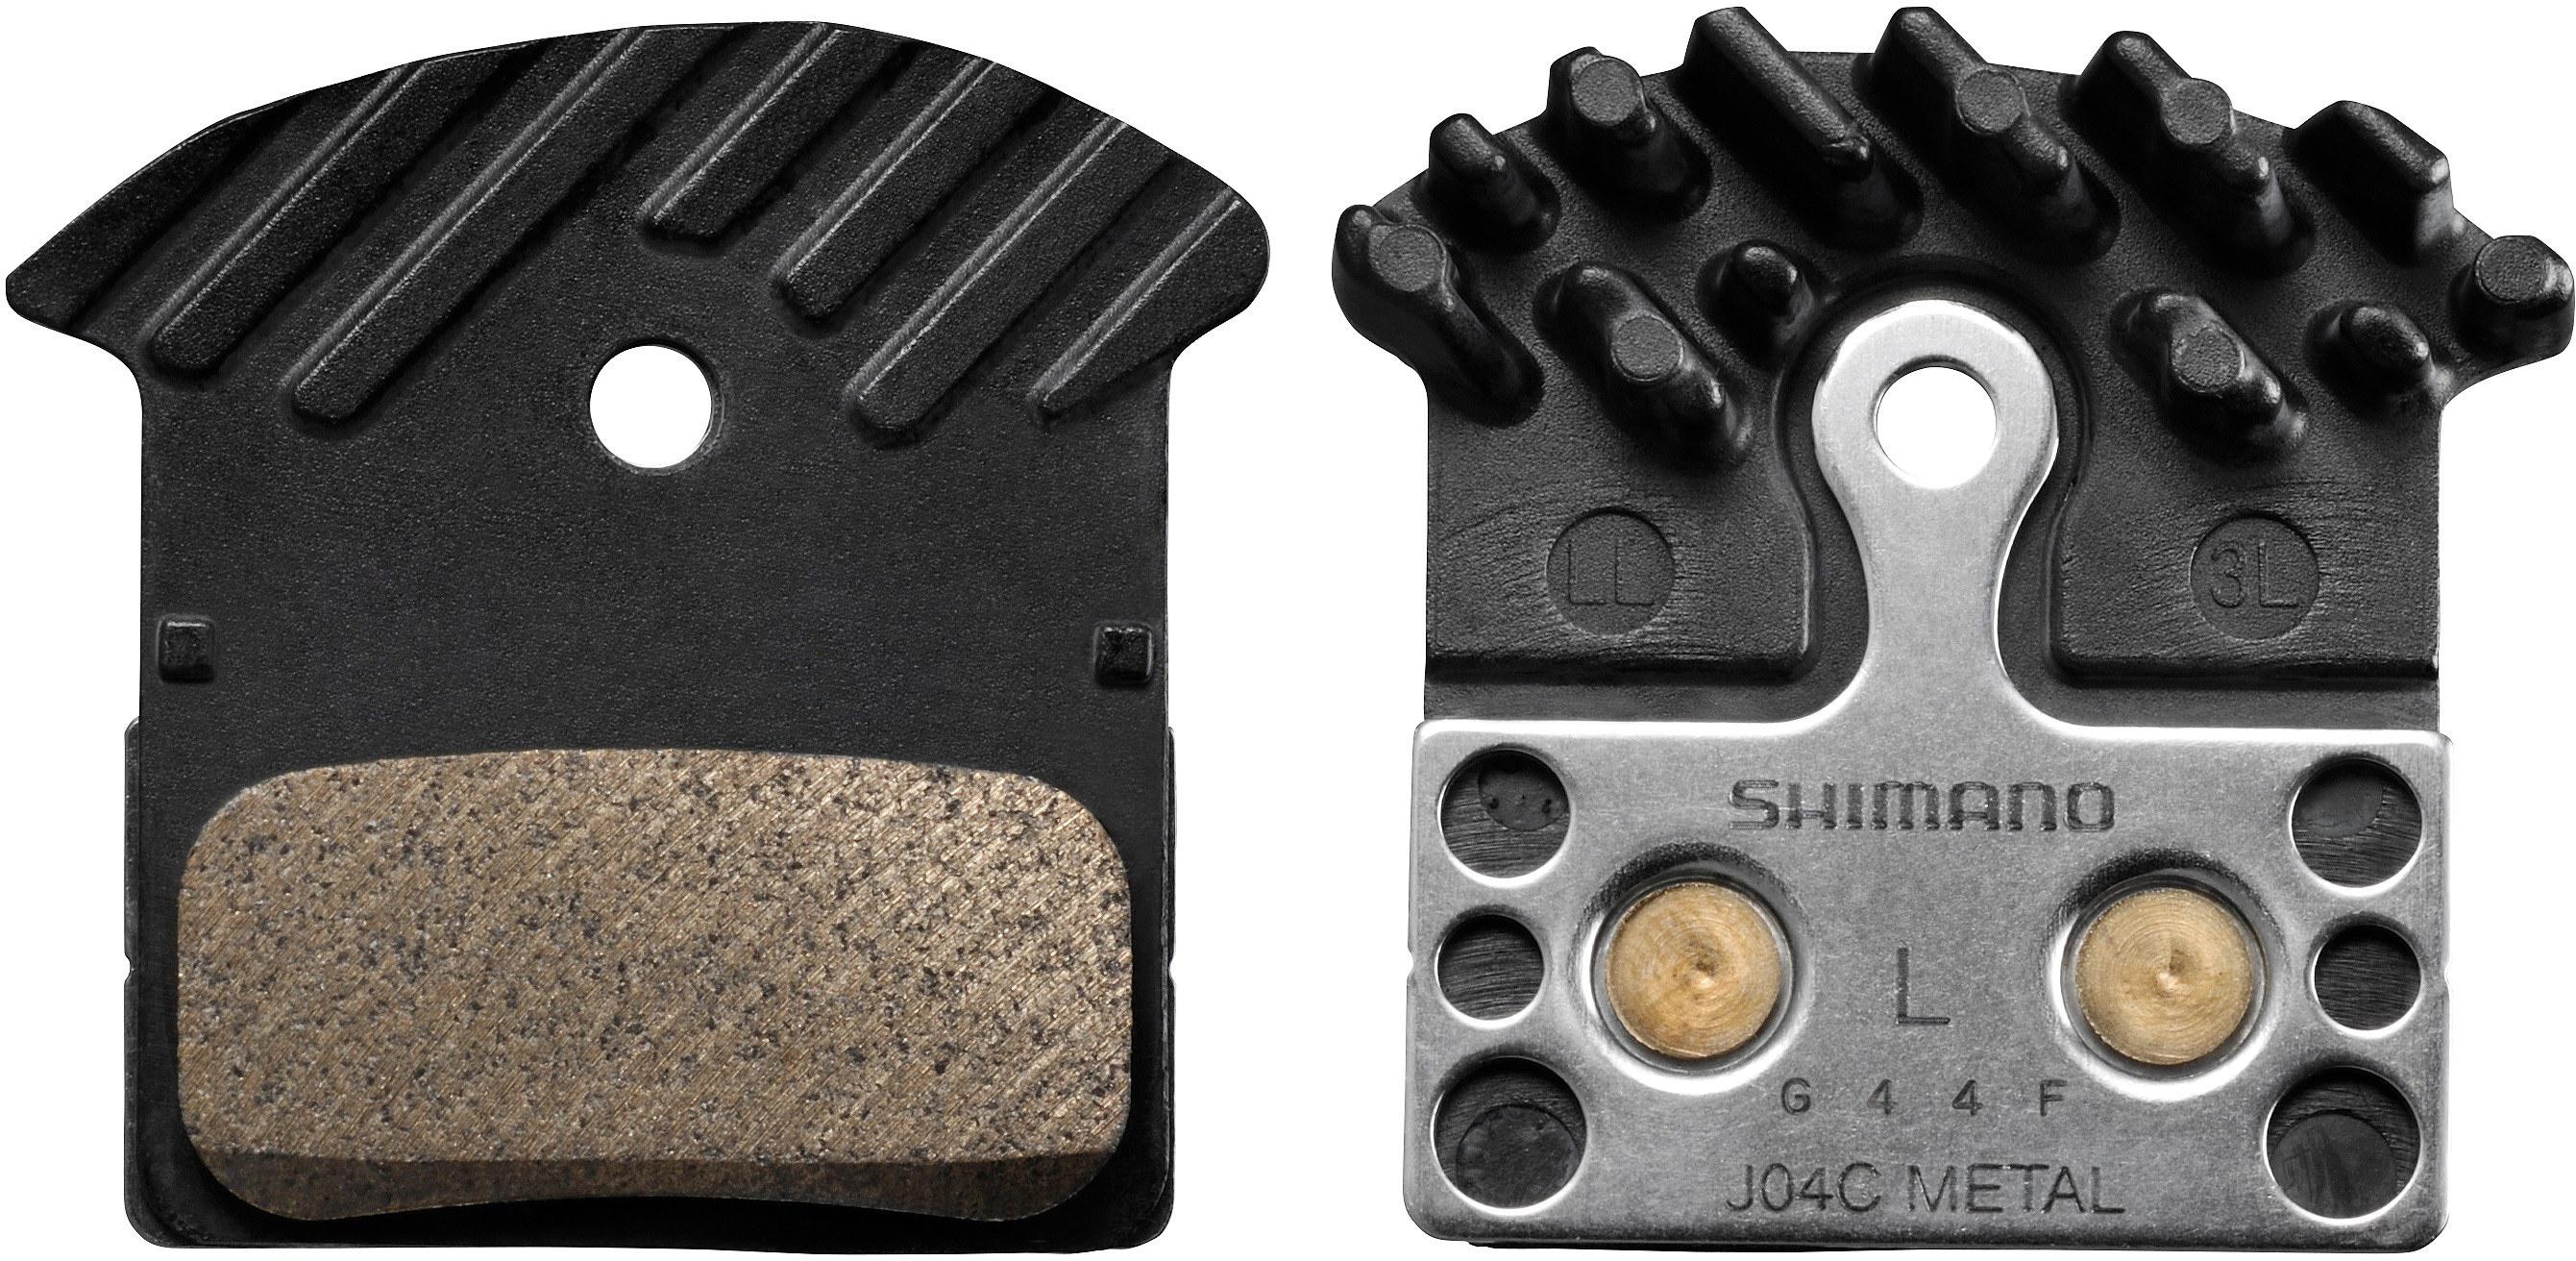 Shimano J04c Metal Disc Brake Pad With Fins - Black/silver